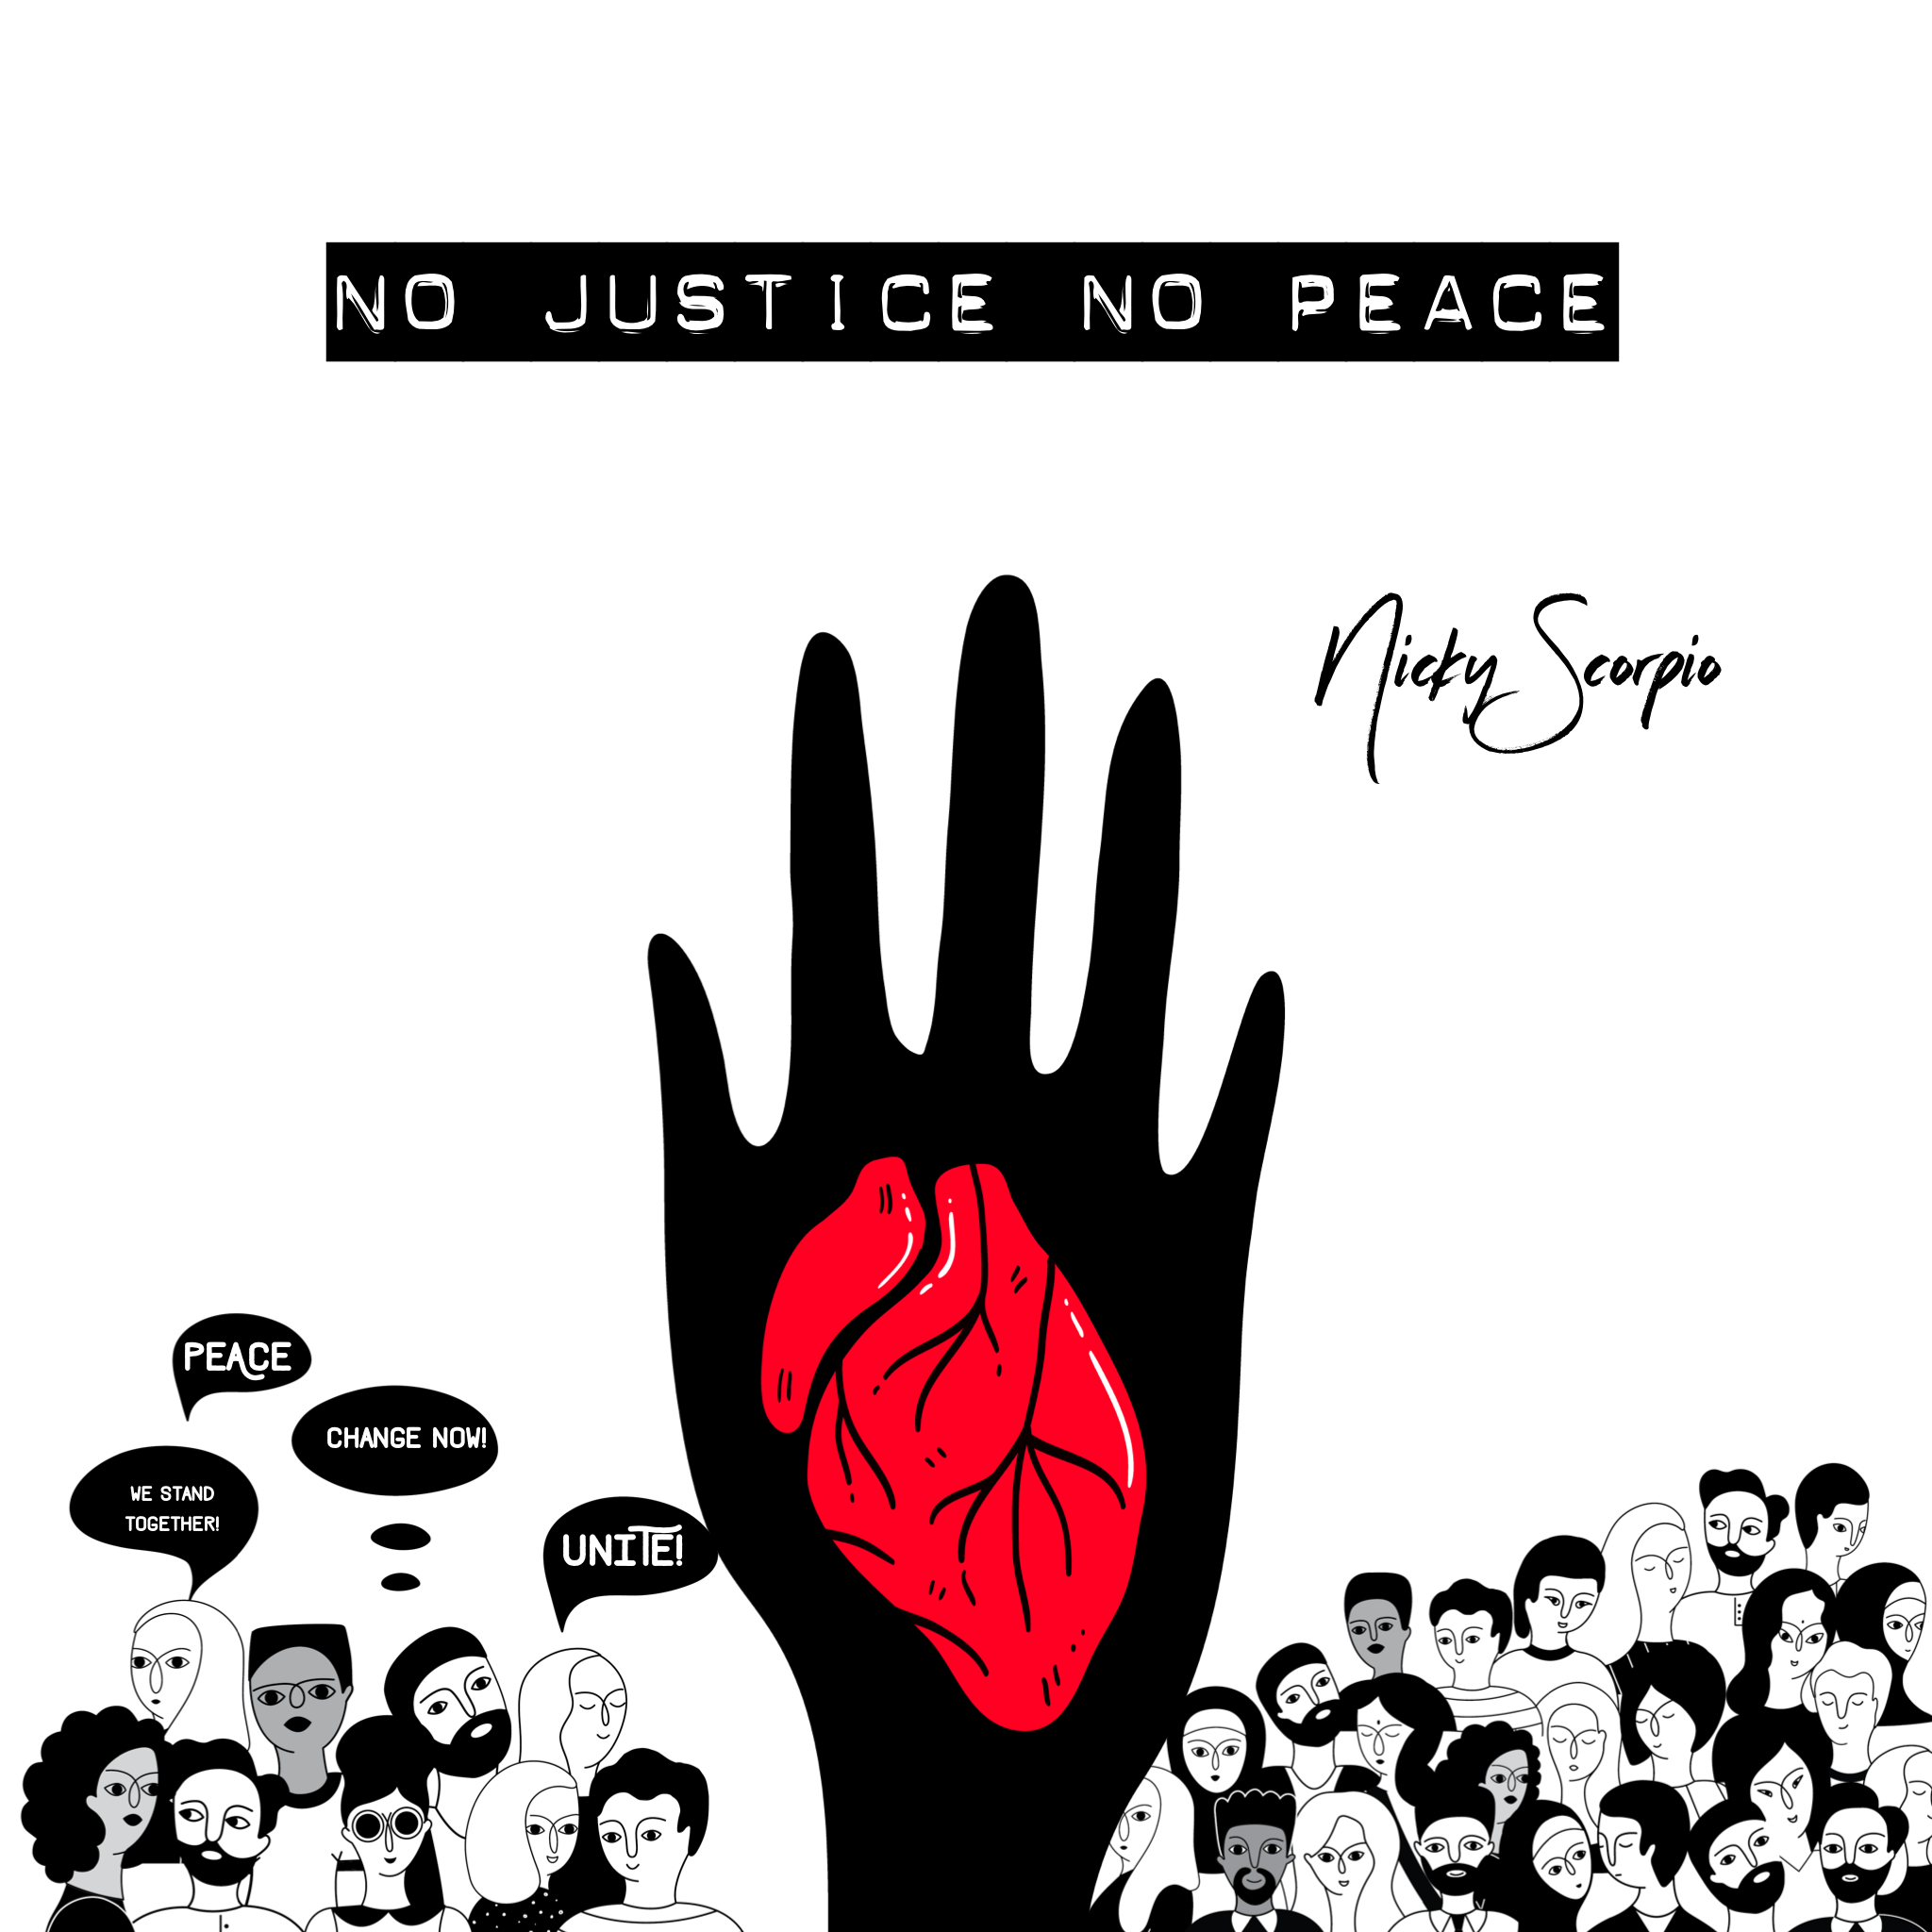 No Justice No Peace artwork by Nicky Scorpio